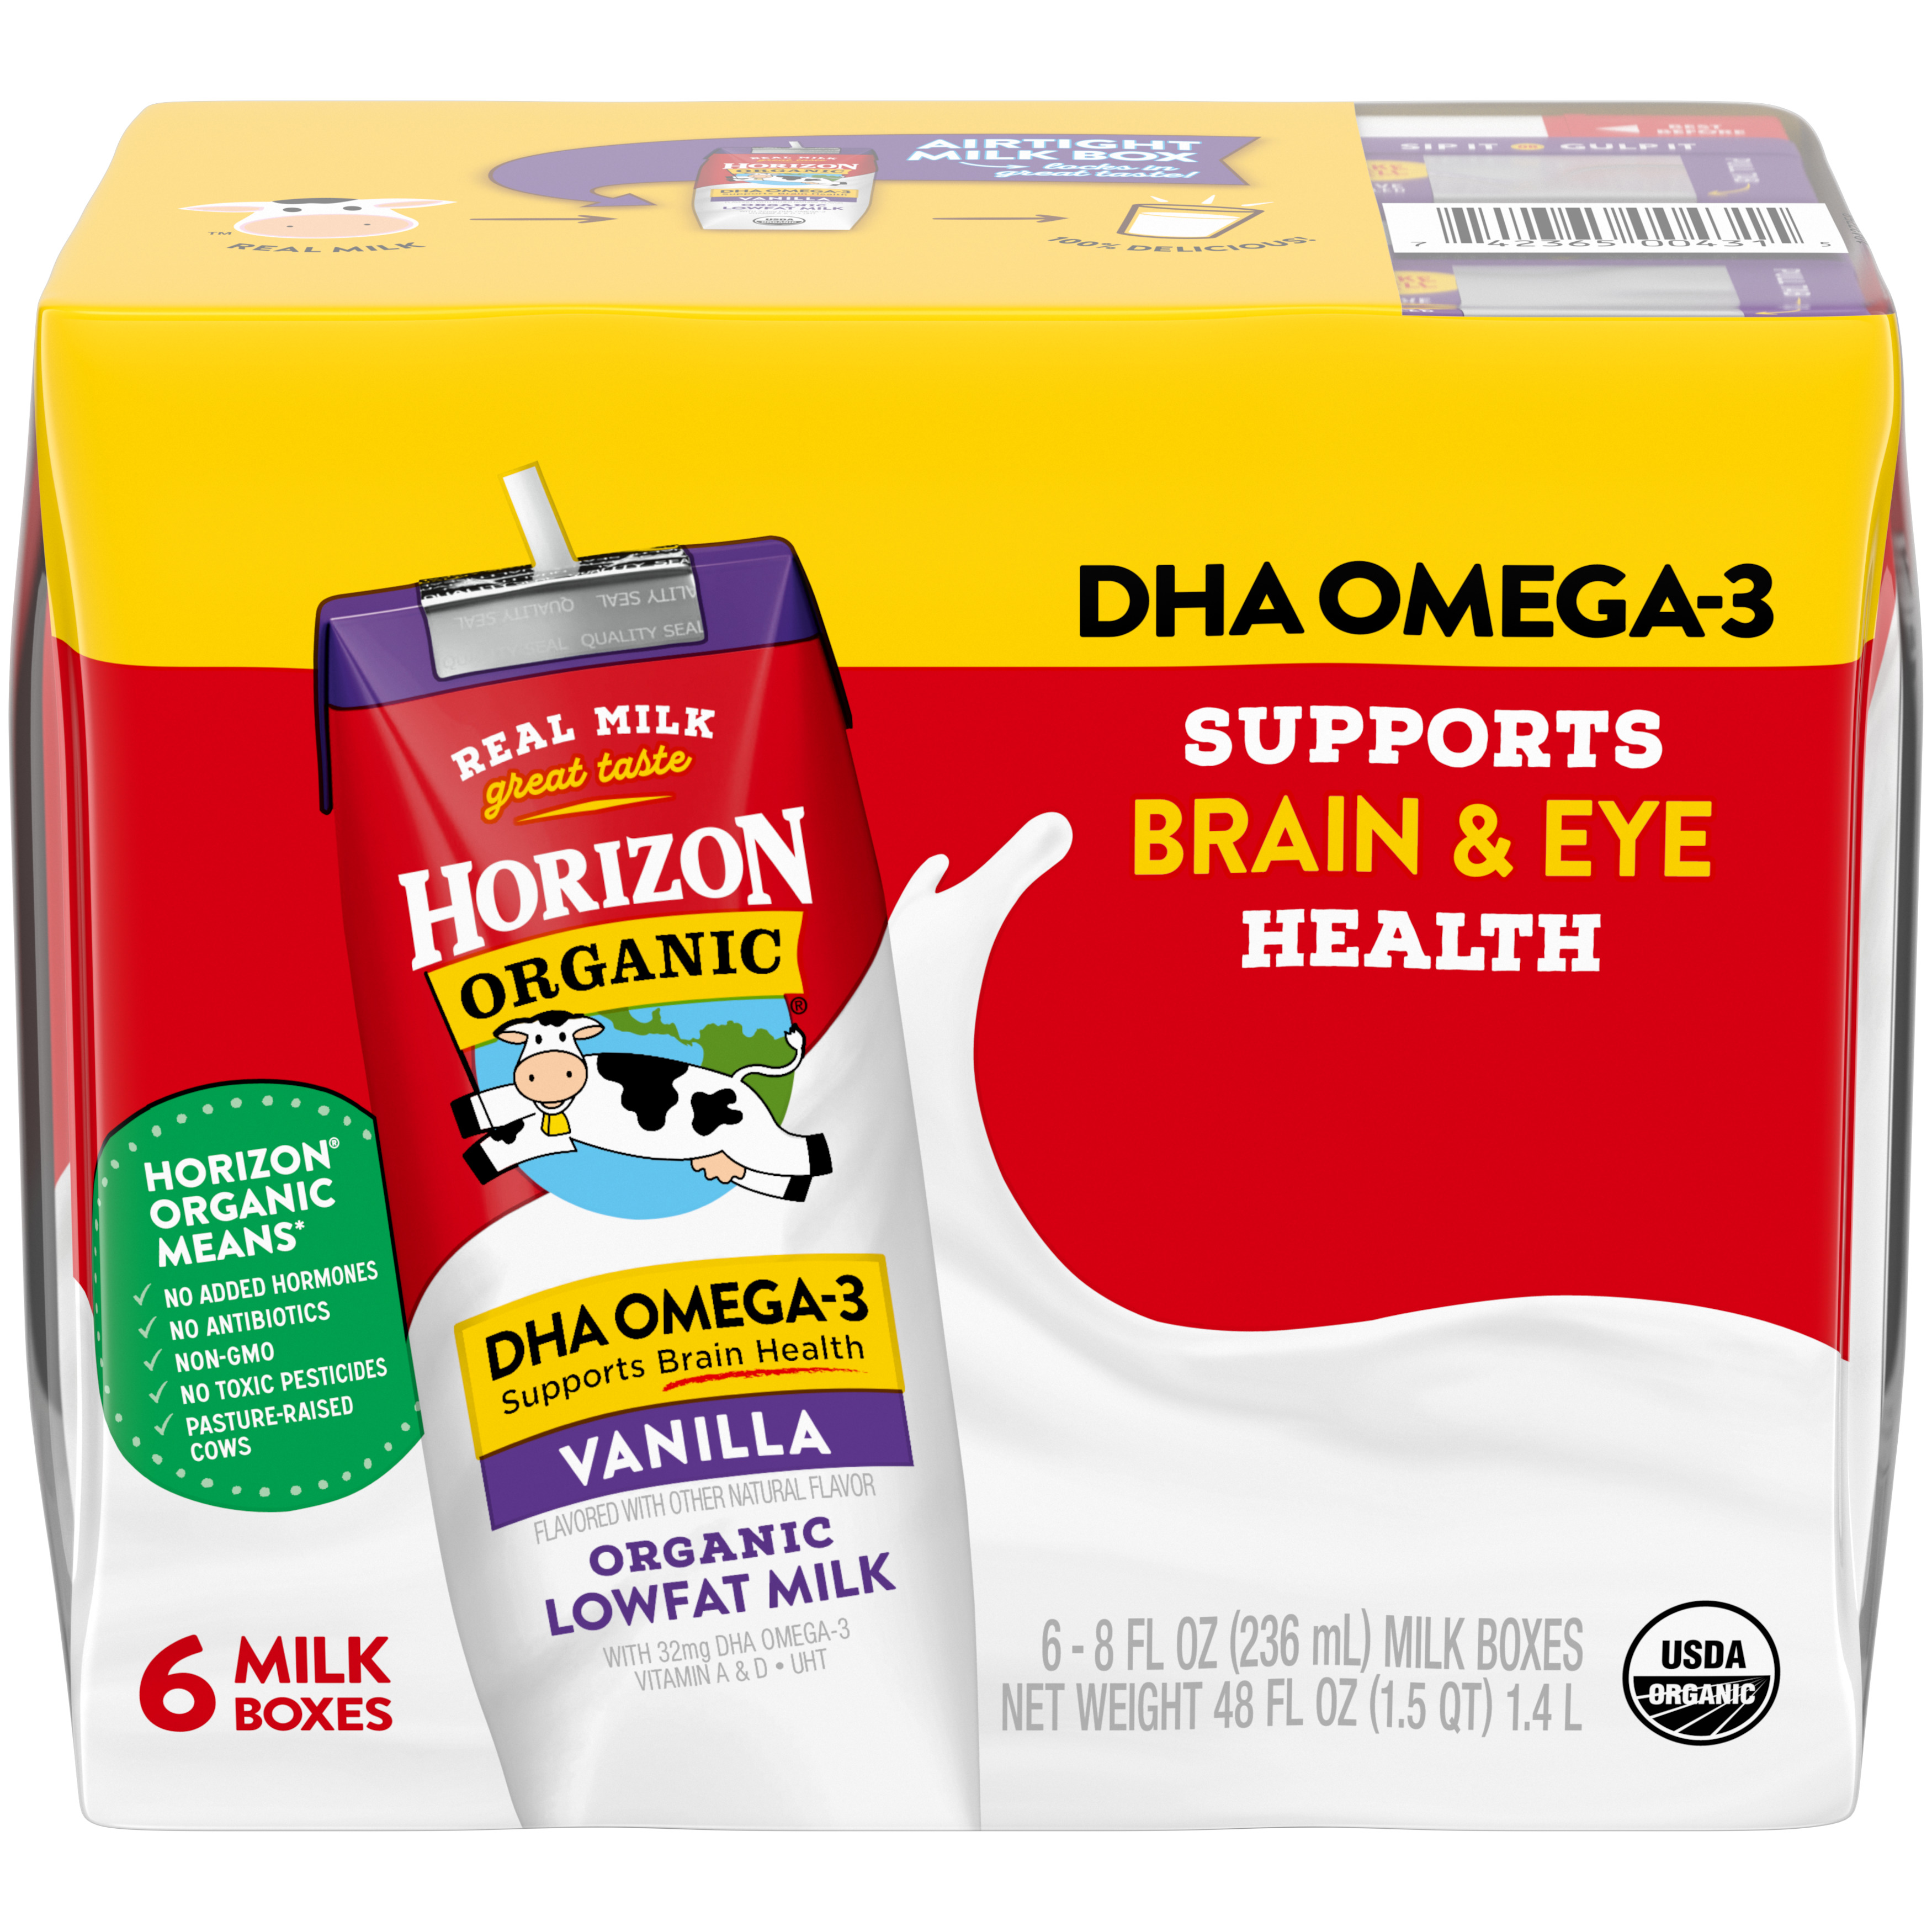 Horizon Organic 1% Lowfat DHA Omega-3 Vanilla Milk 3 innerpacks per case 48.0 fl